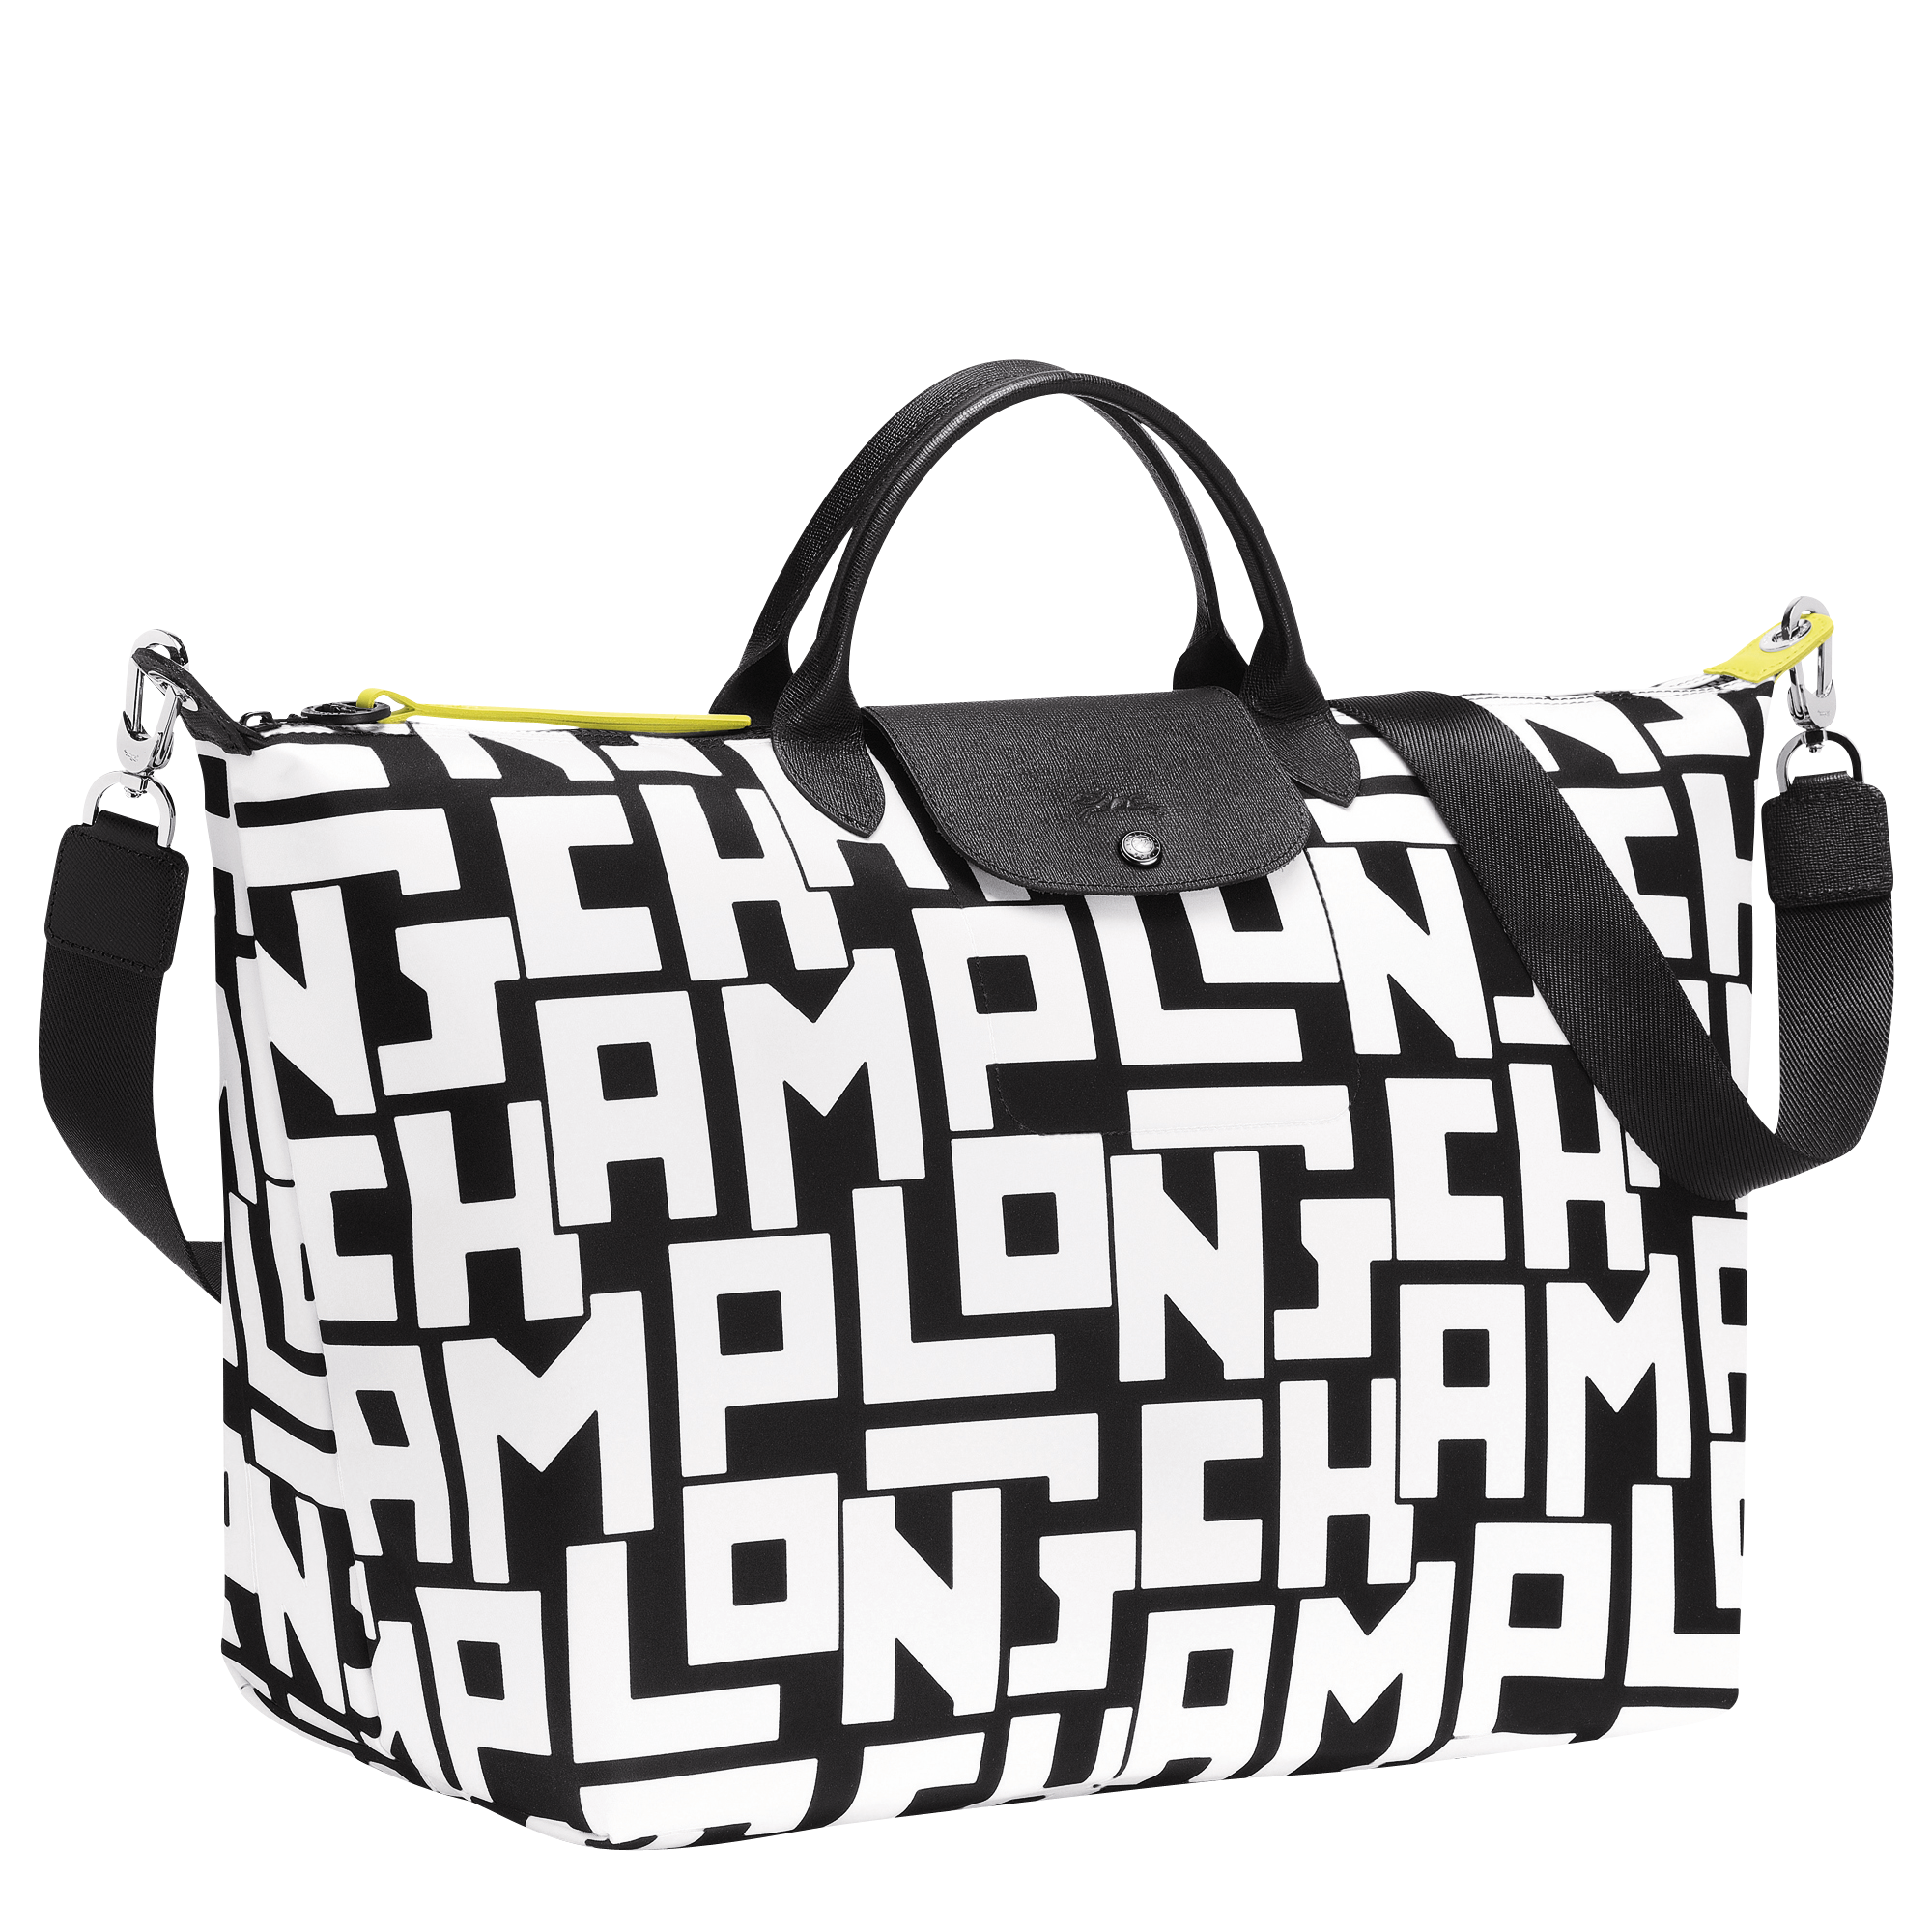 longchamp black and white bag